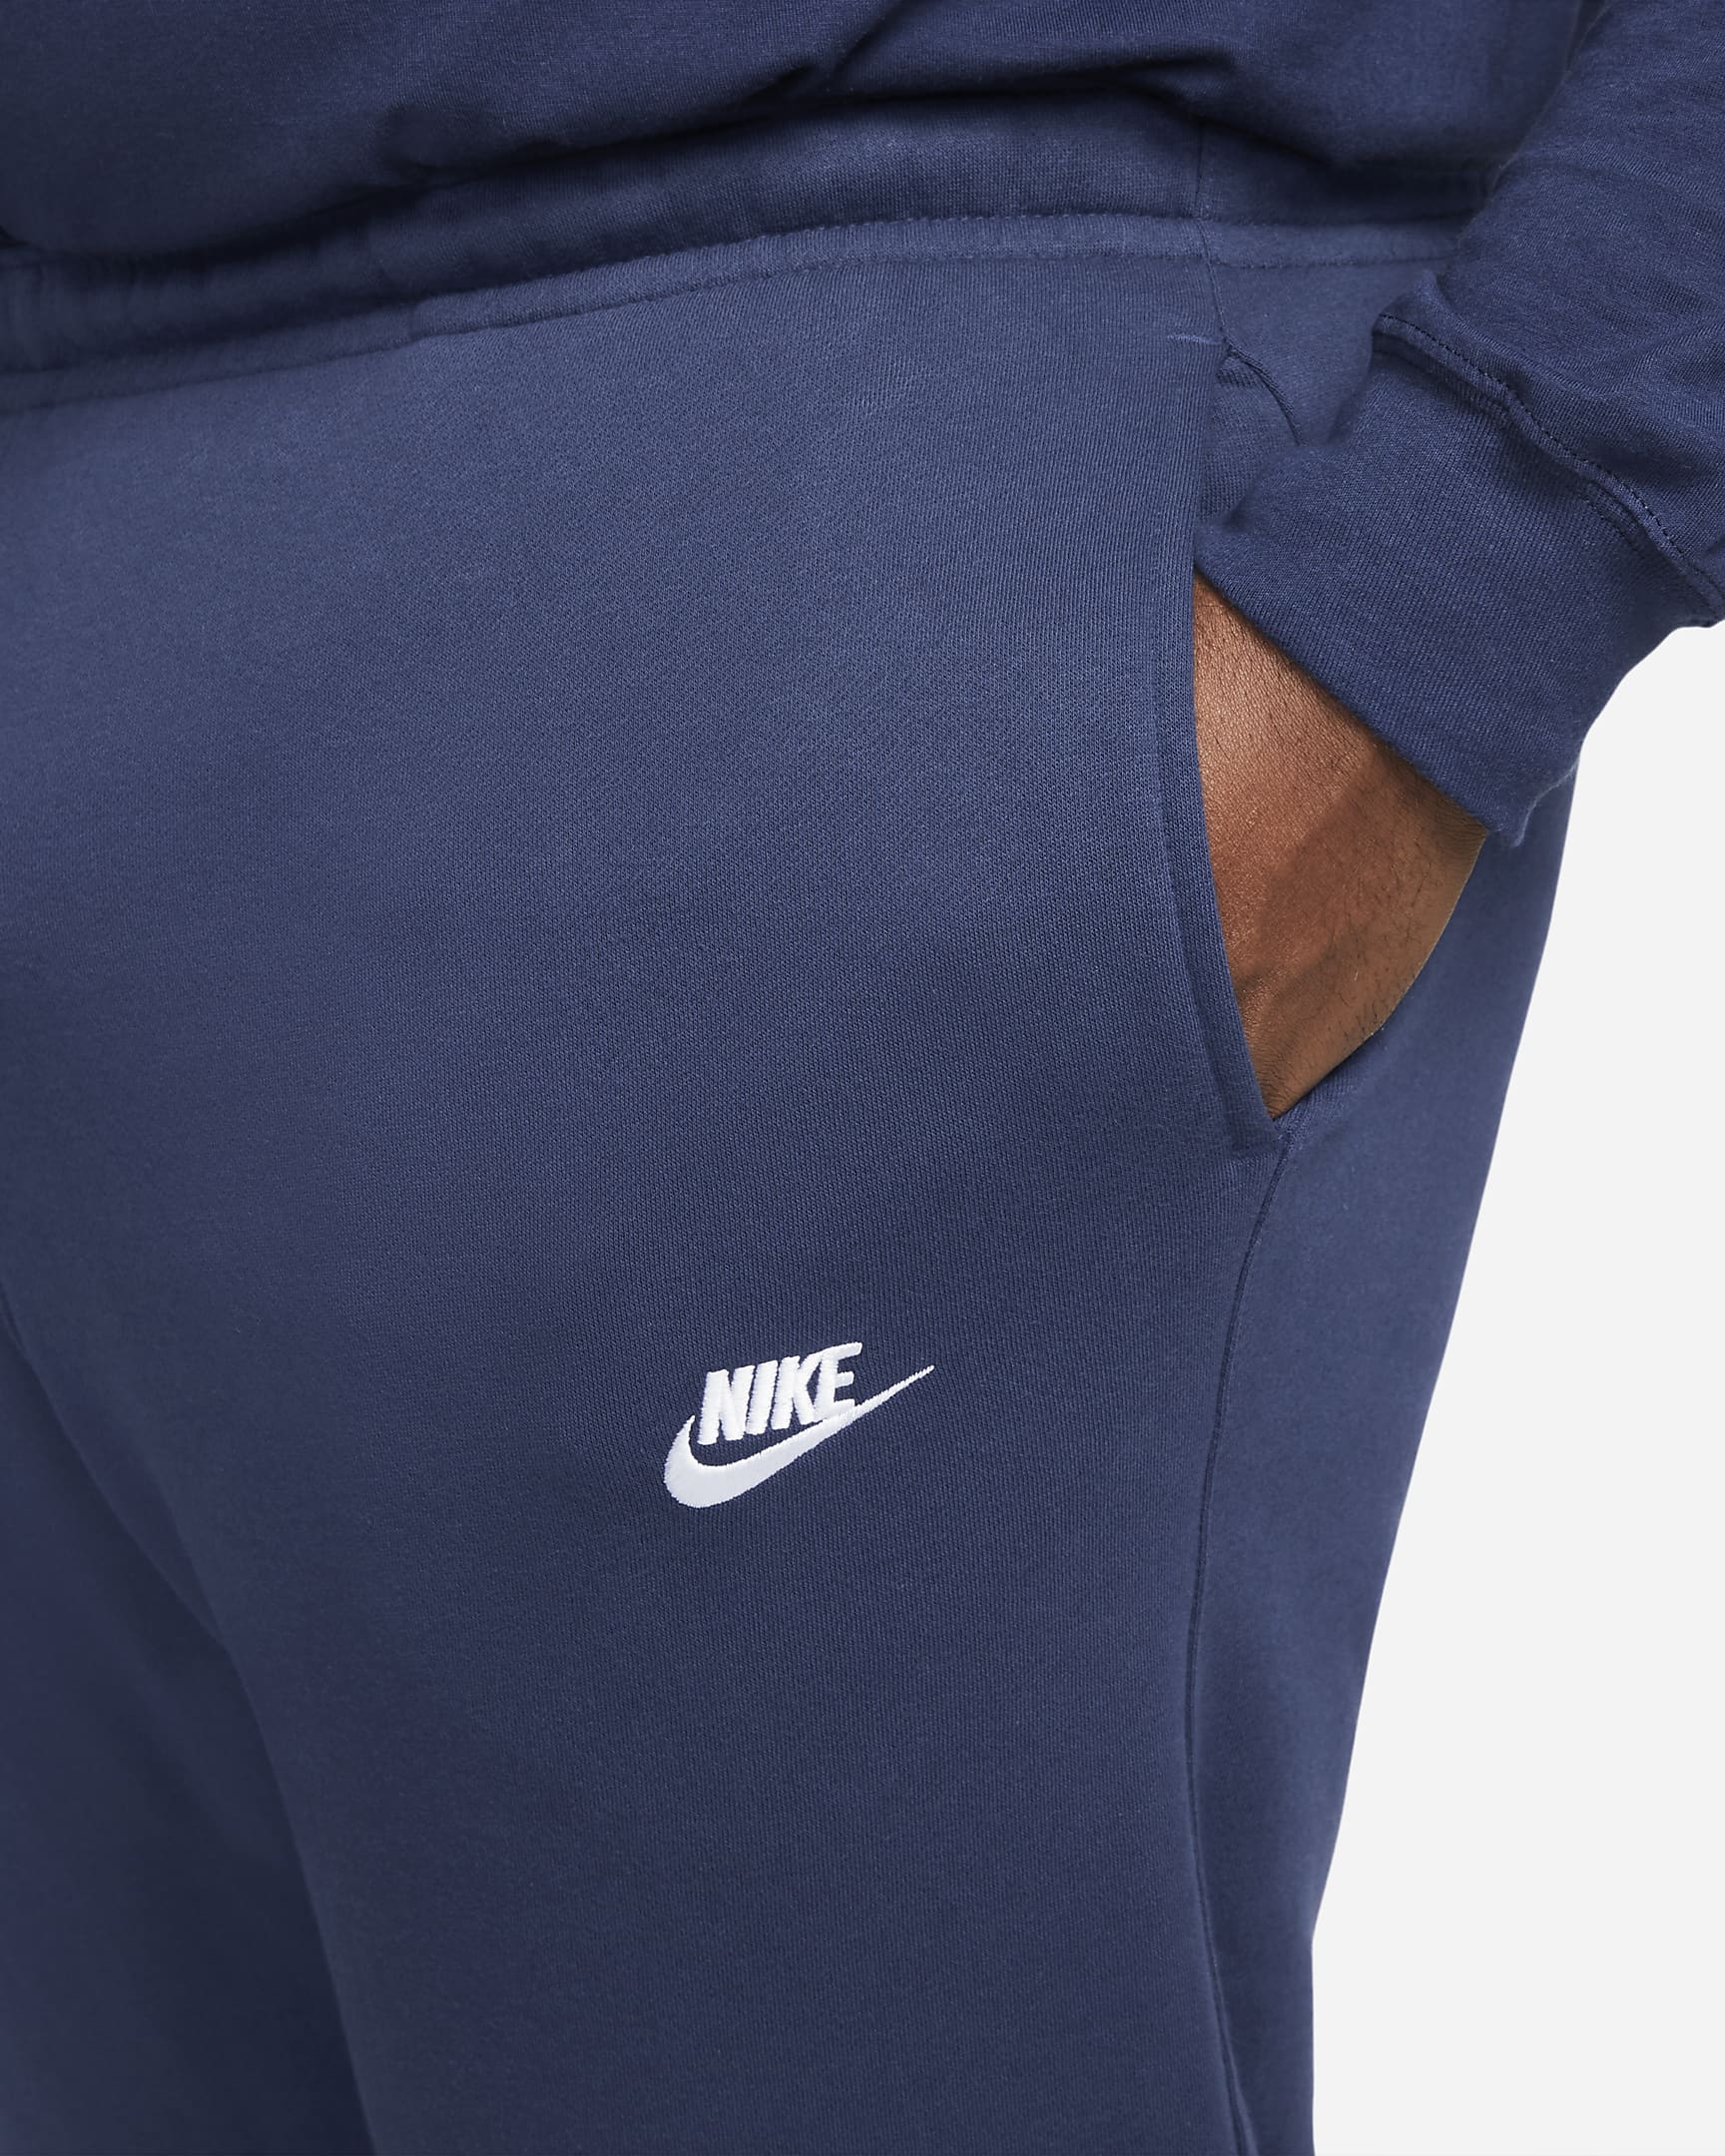 Nike Sportswear Club Fleece Men's Pants - Midnight Navy/Midnight Navy/White